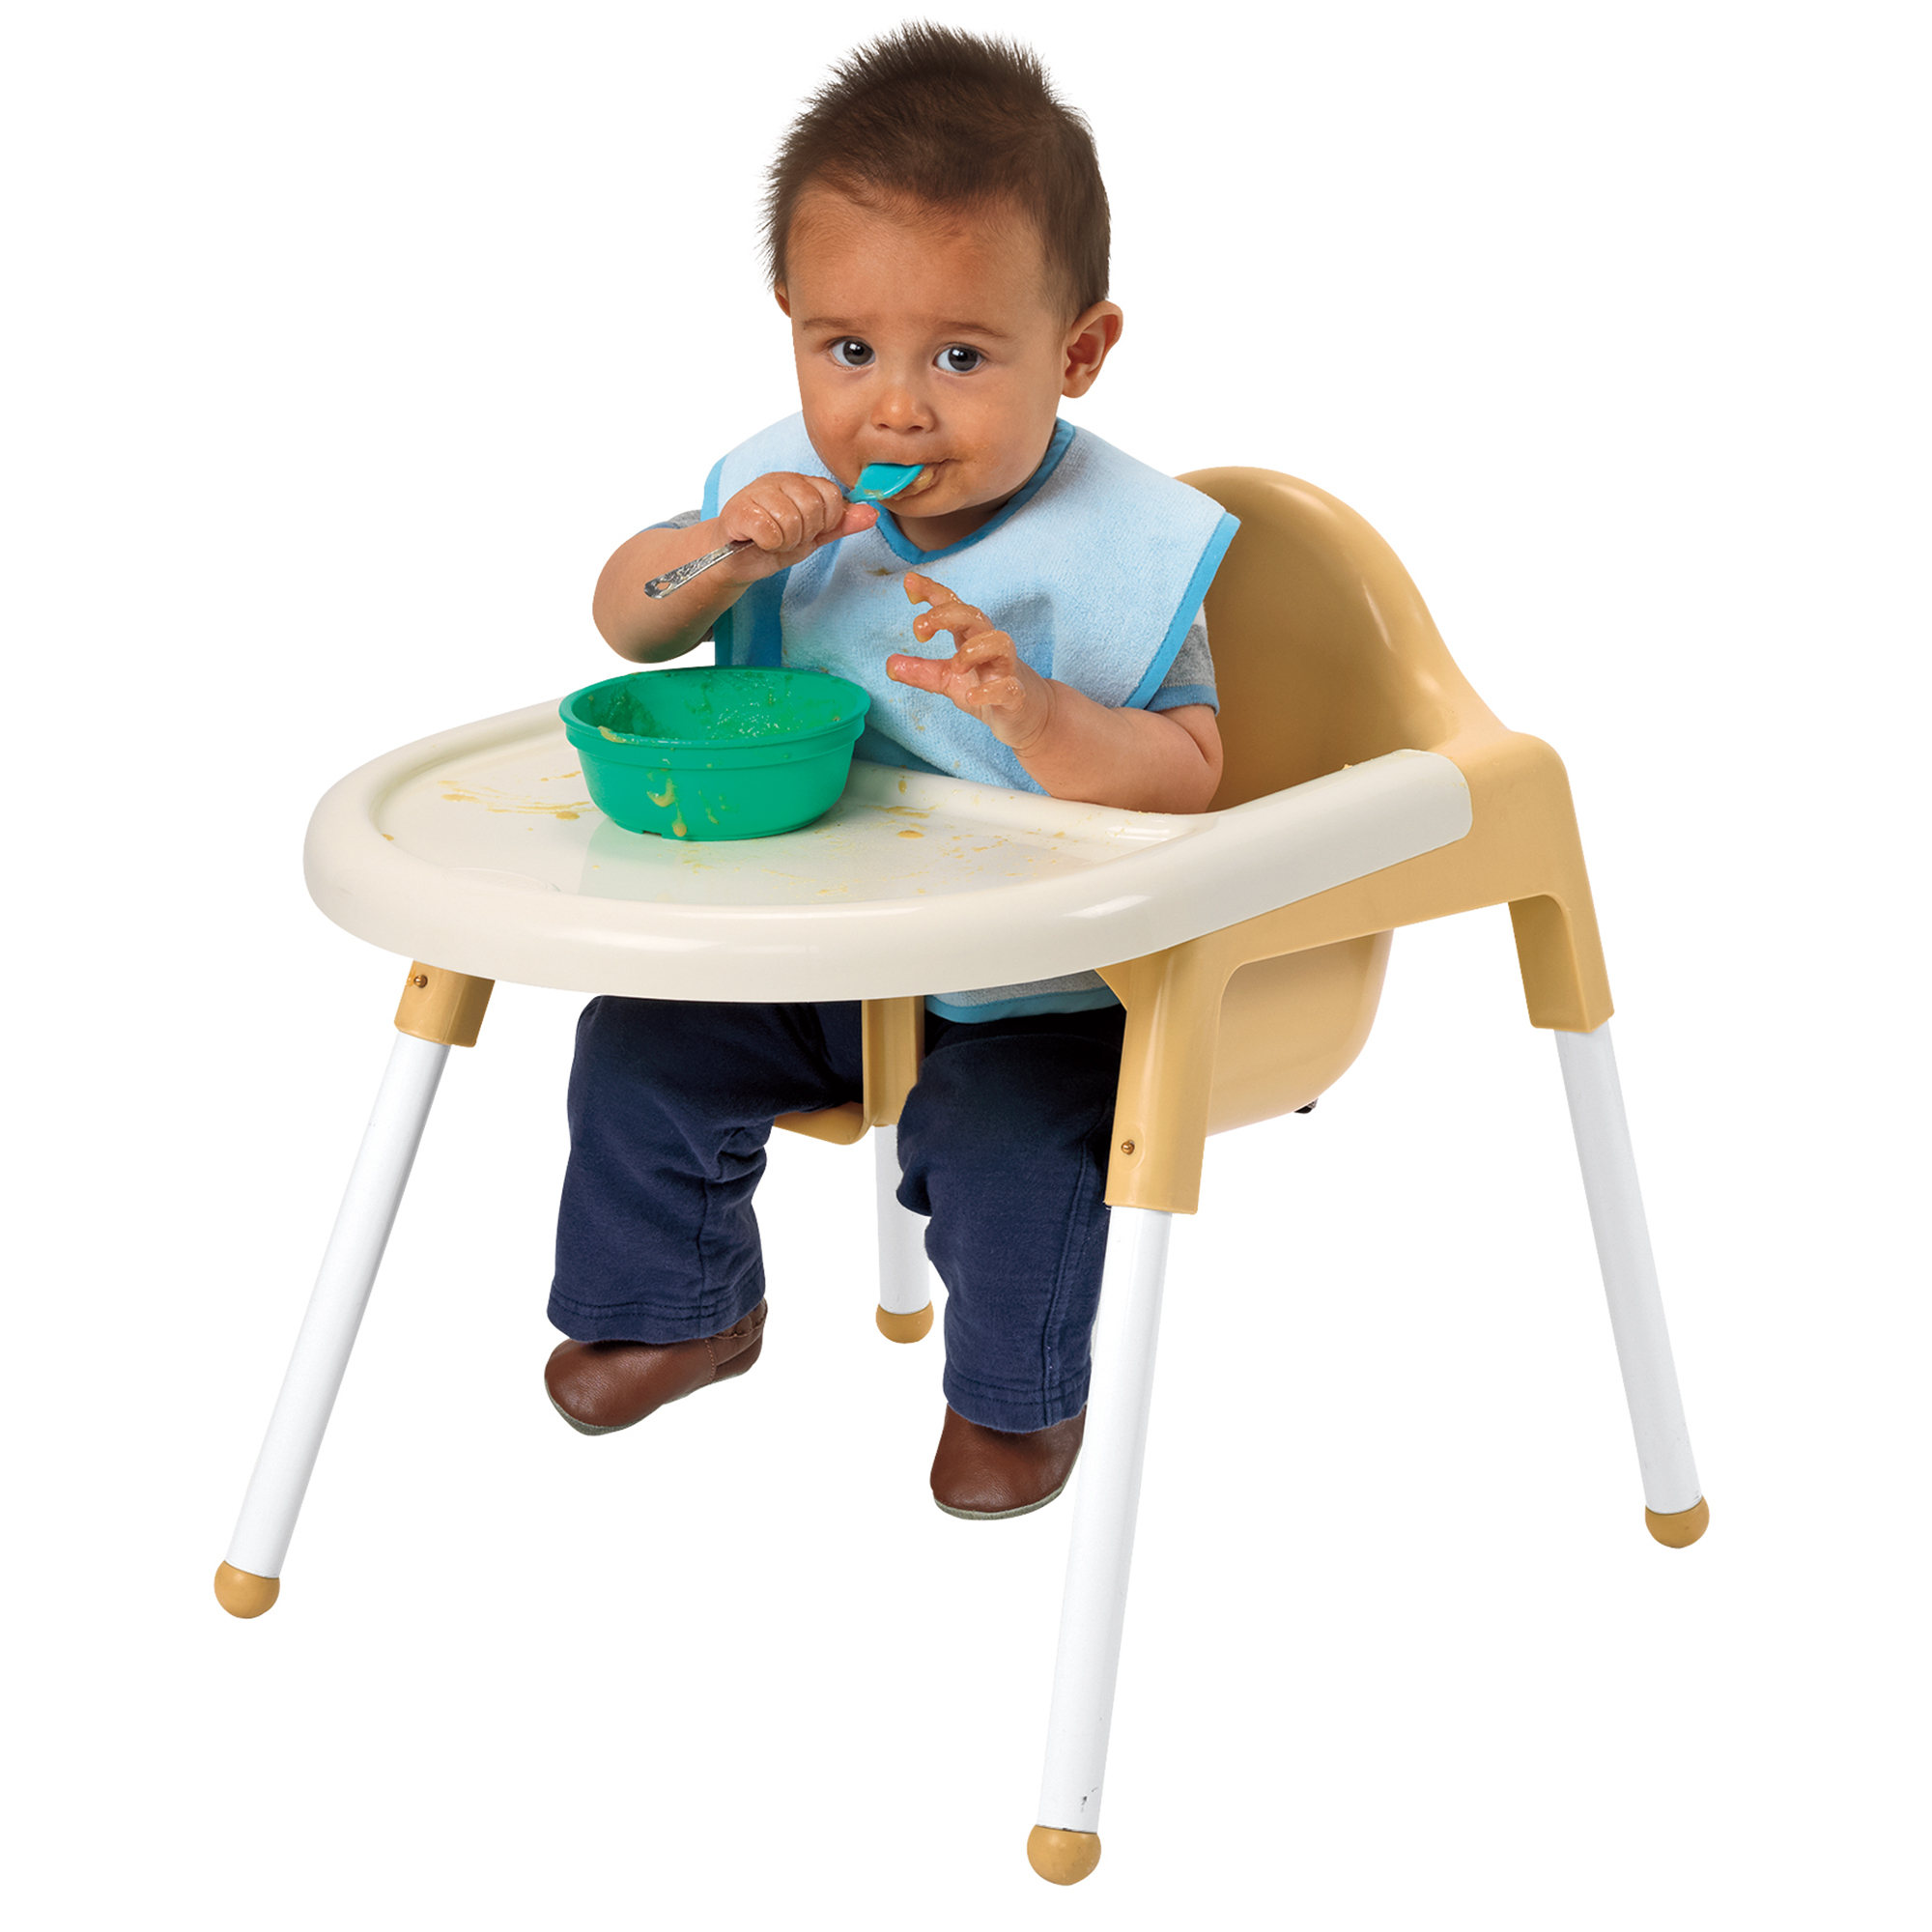 Голодный стул. Электро стул для детей. Baby feeding Chair. Baby High Chair for feeding.